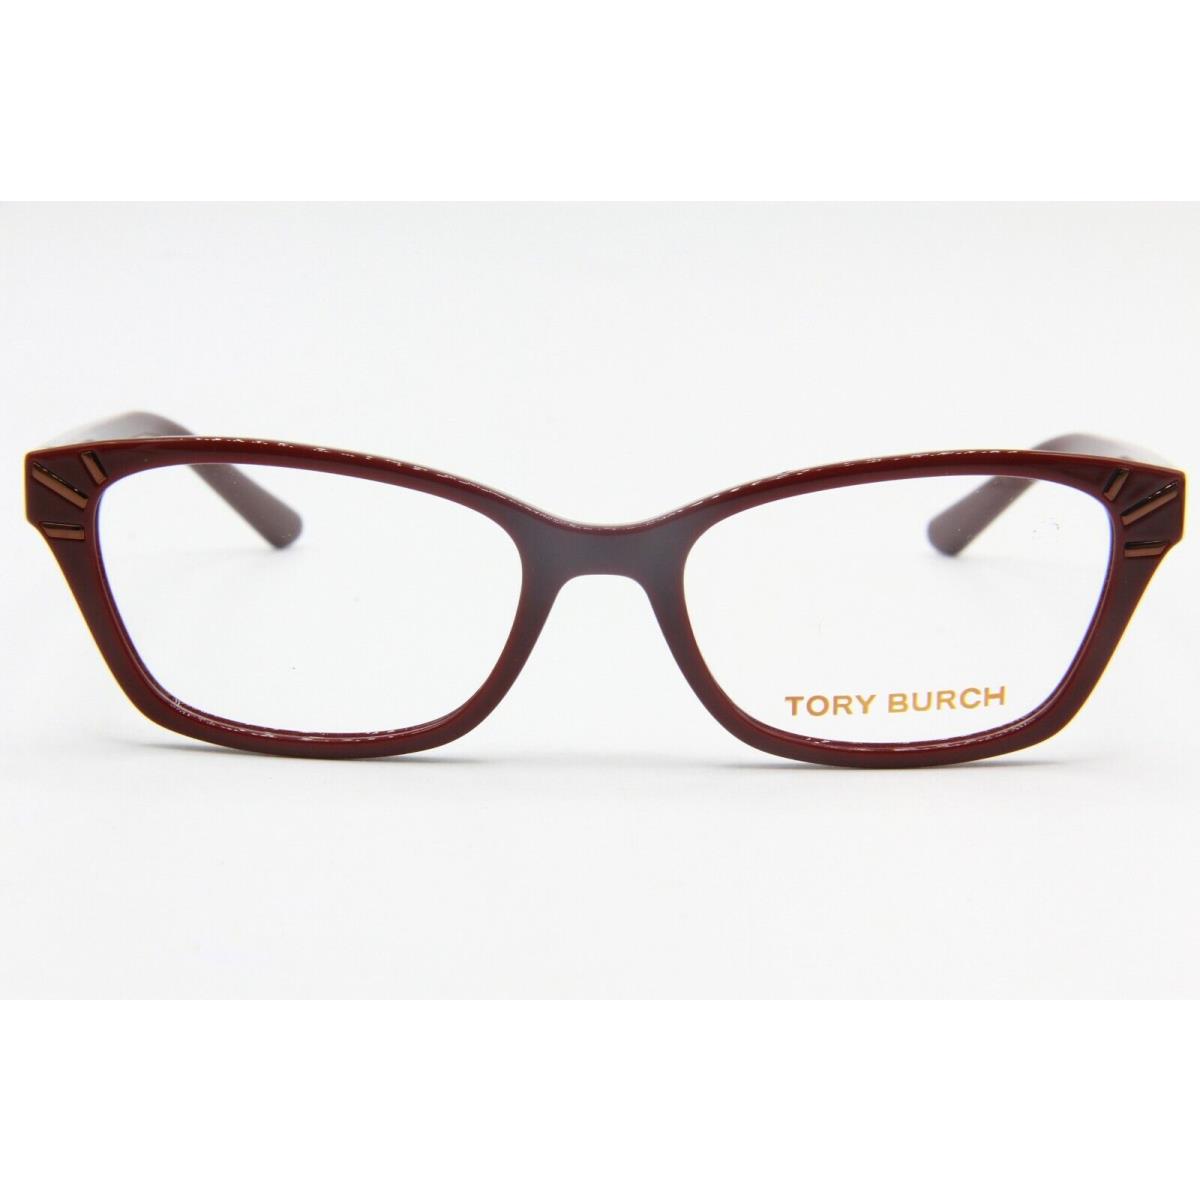 Tory Burch eyeglasses  - Red Frame 0